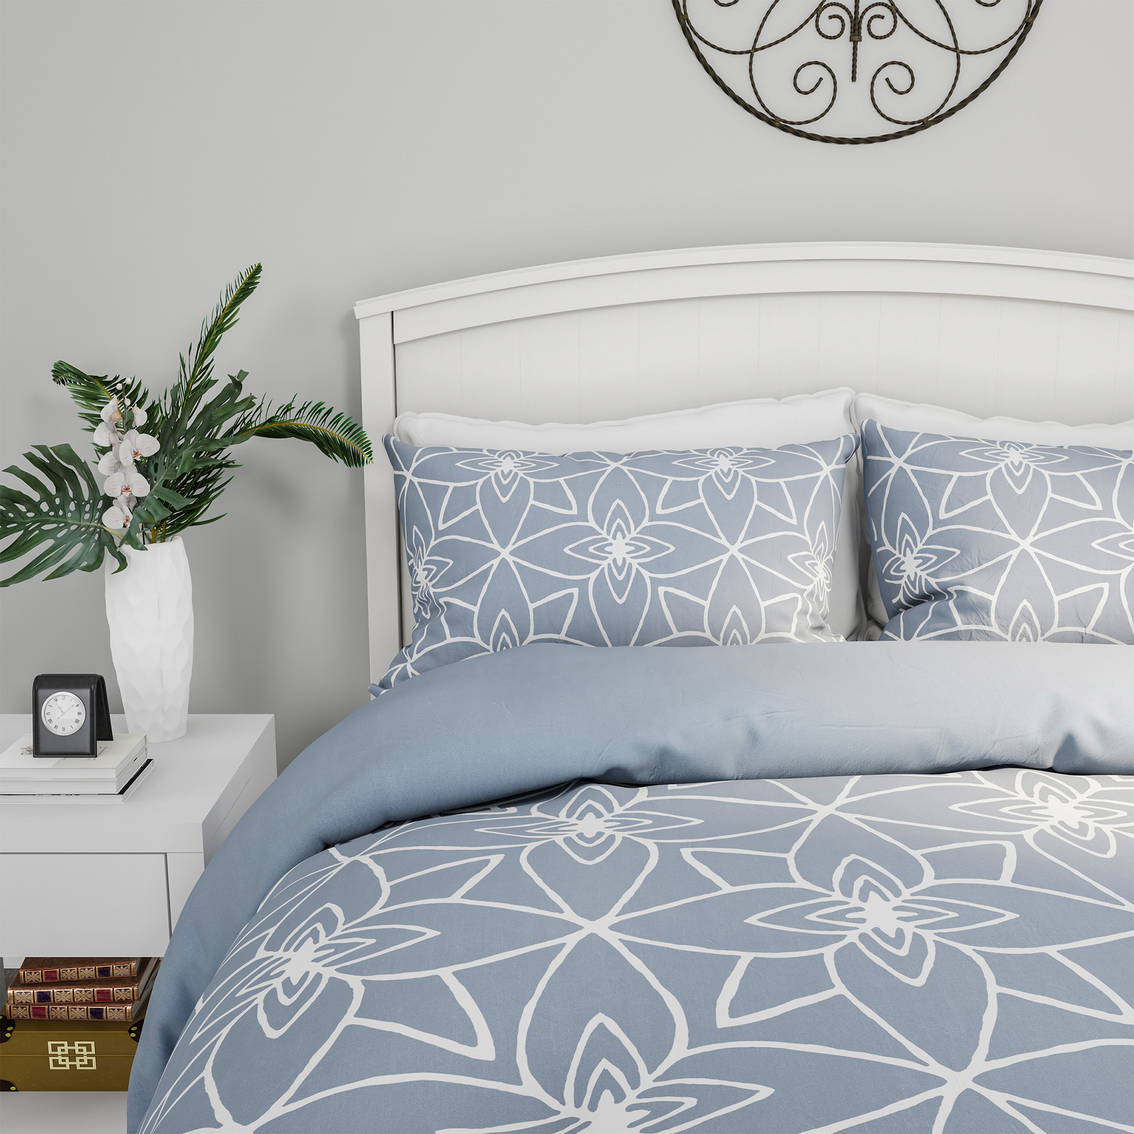 Lavish Home 3 pc. Comforter Set with Exclusive Stargaze Design - Image 2 of 7